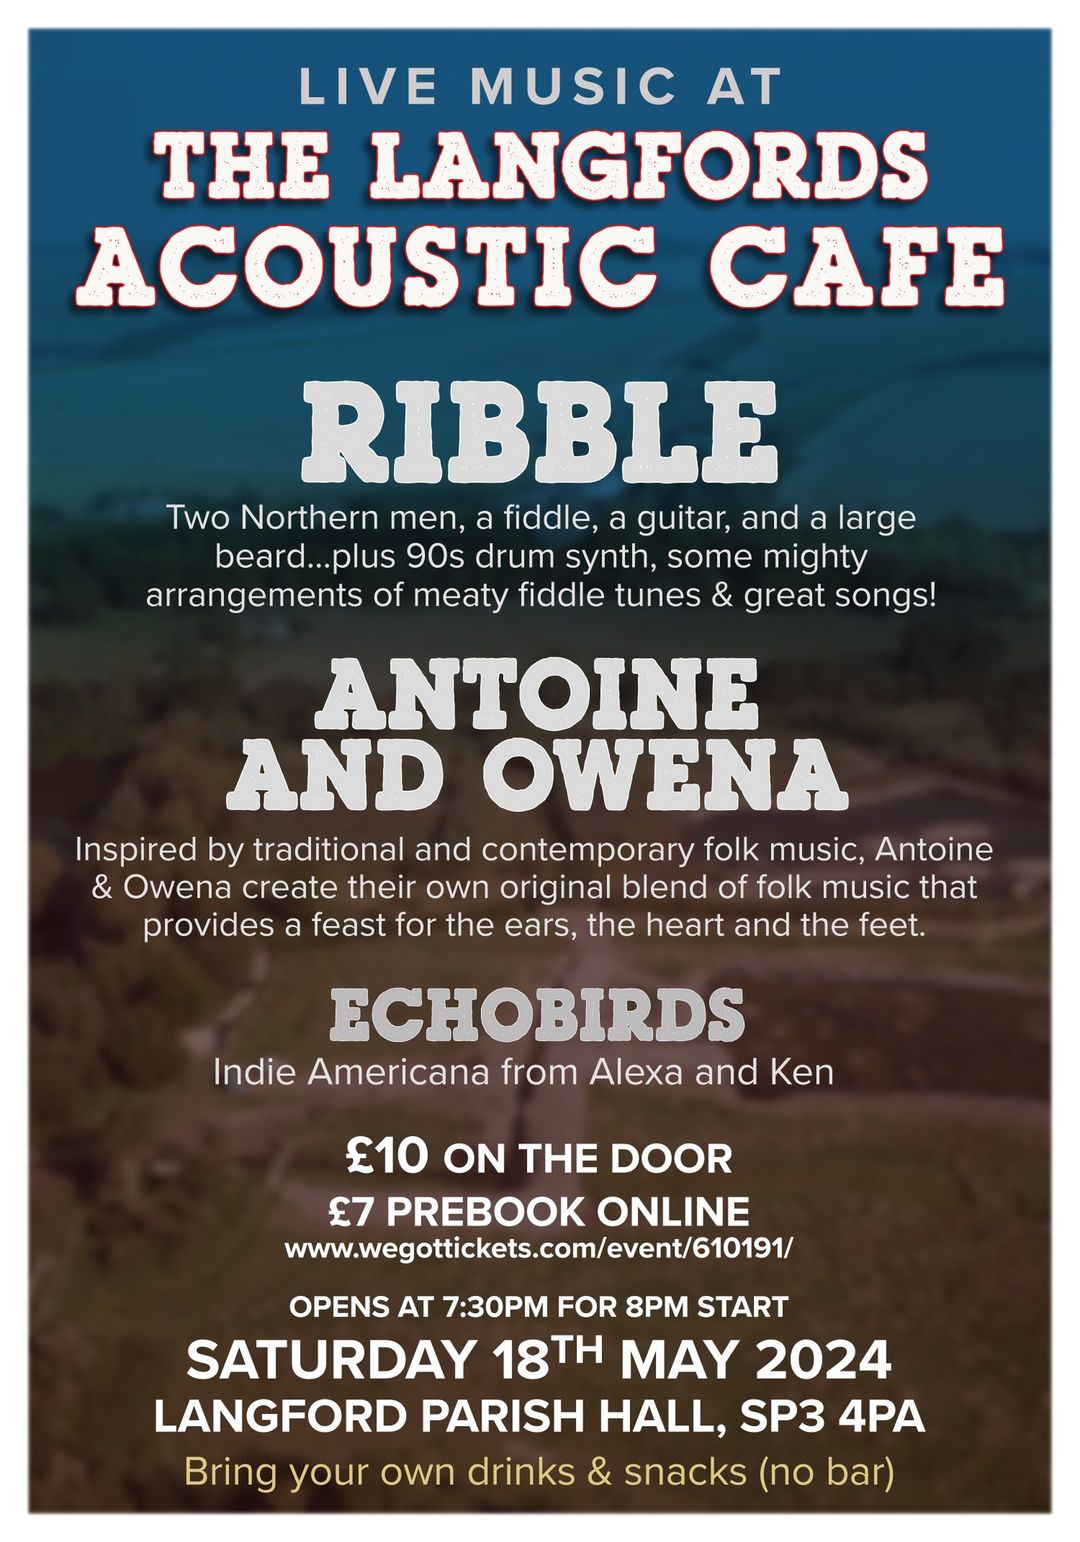 Langfords Acoustic Cafe: Ribble + Antoine & Owena + Echobirds